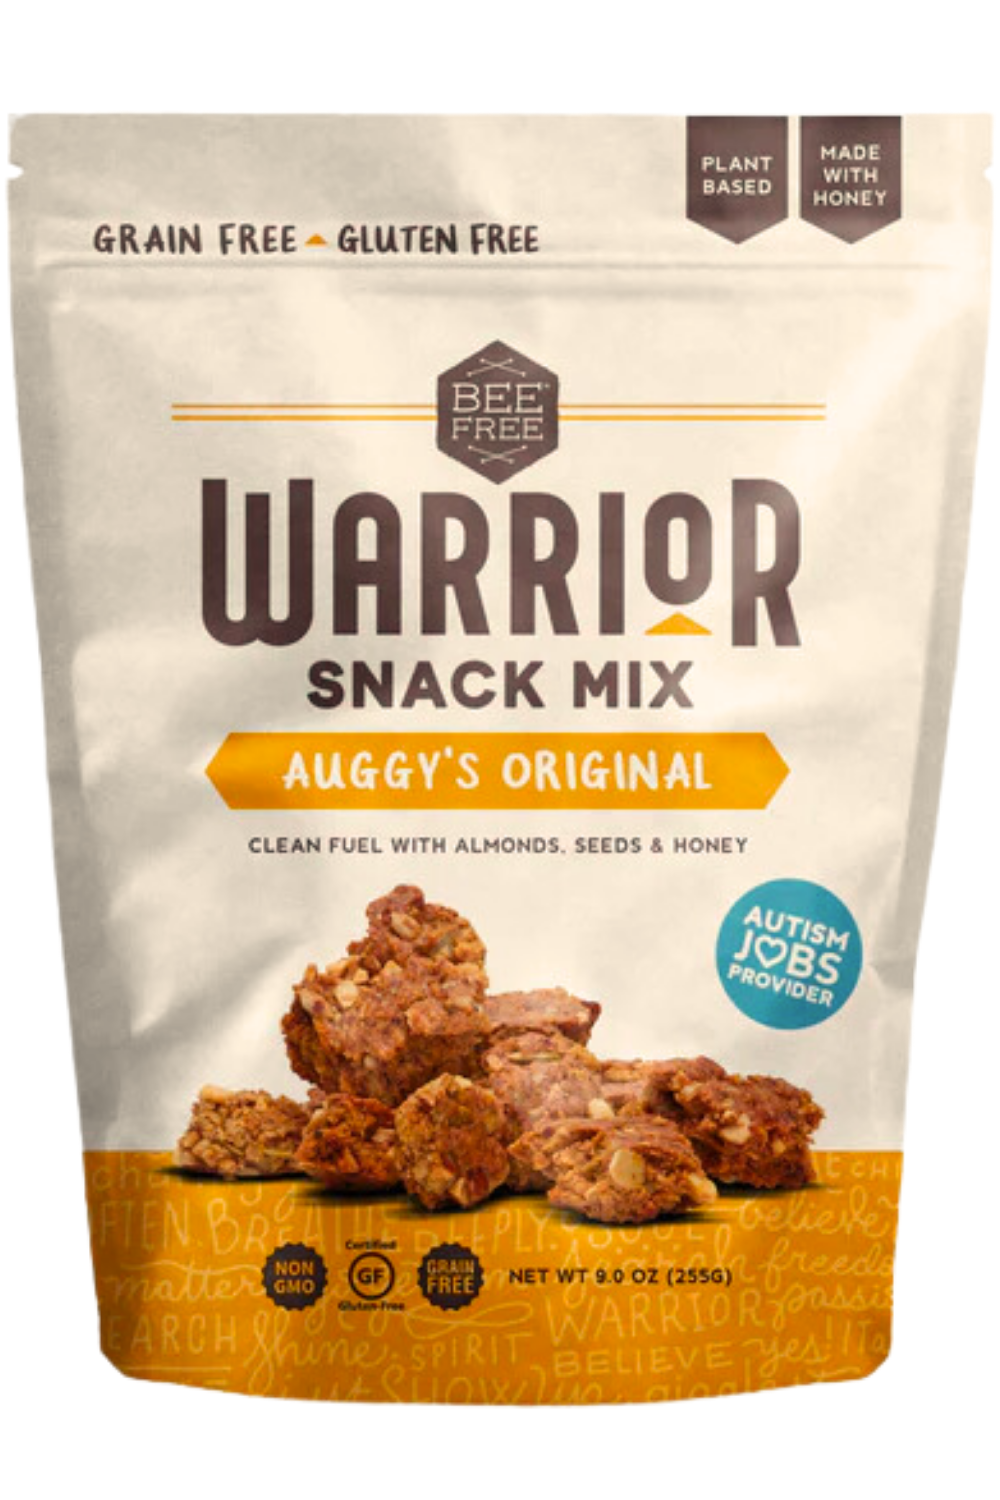 Warrior Snack Mix- "Auggy's Original WARRIOR MIX", Original Warrior Mix By Top Of Island, 9 oz bag